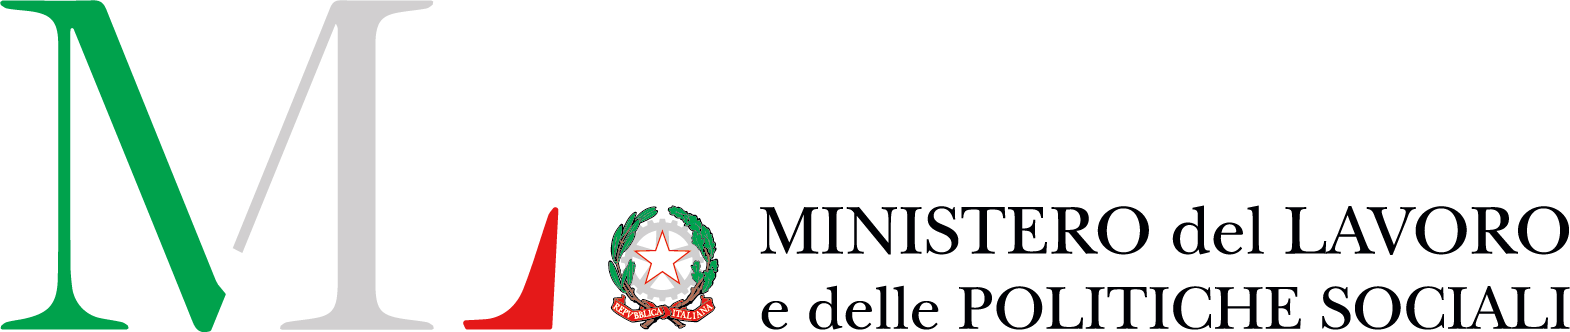 logo-ministero-lavoro